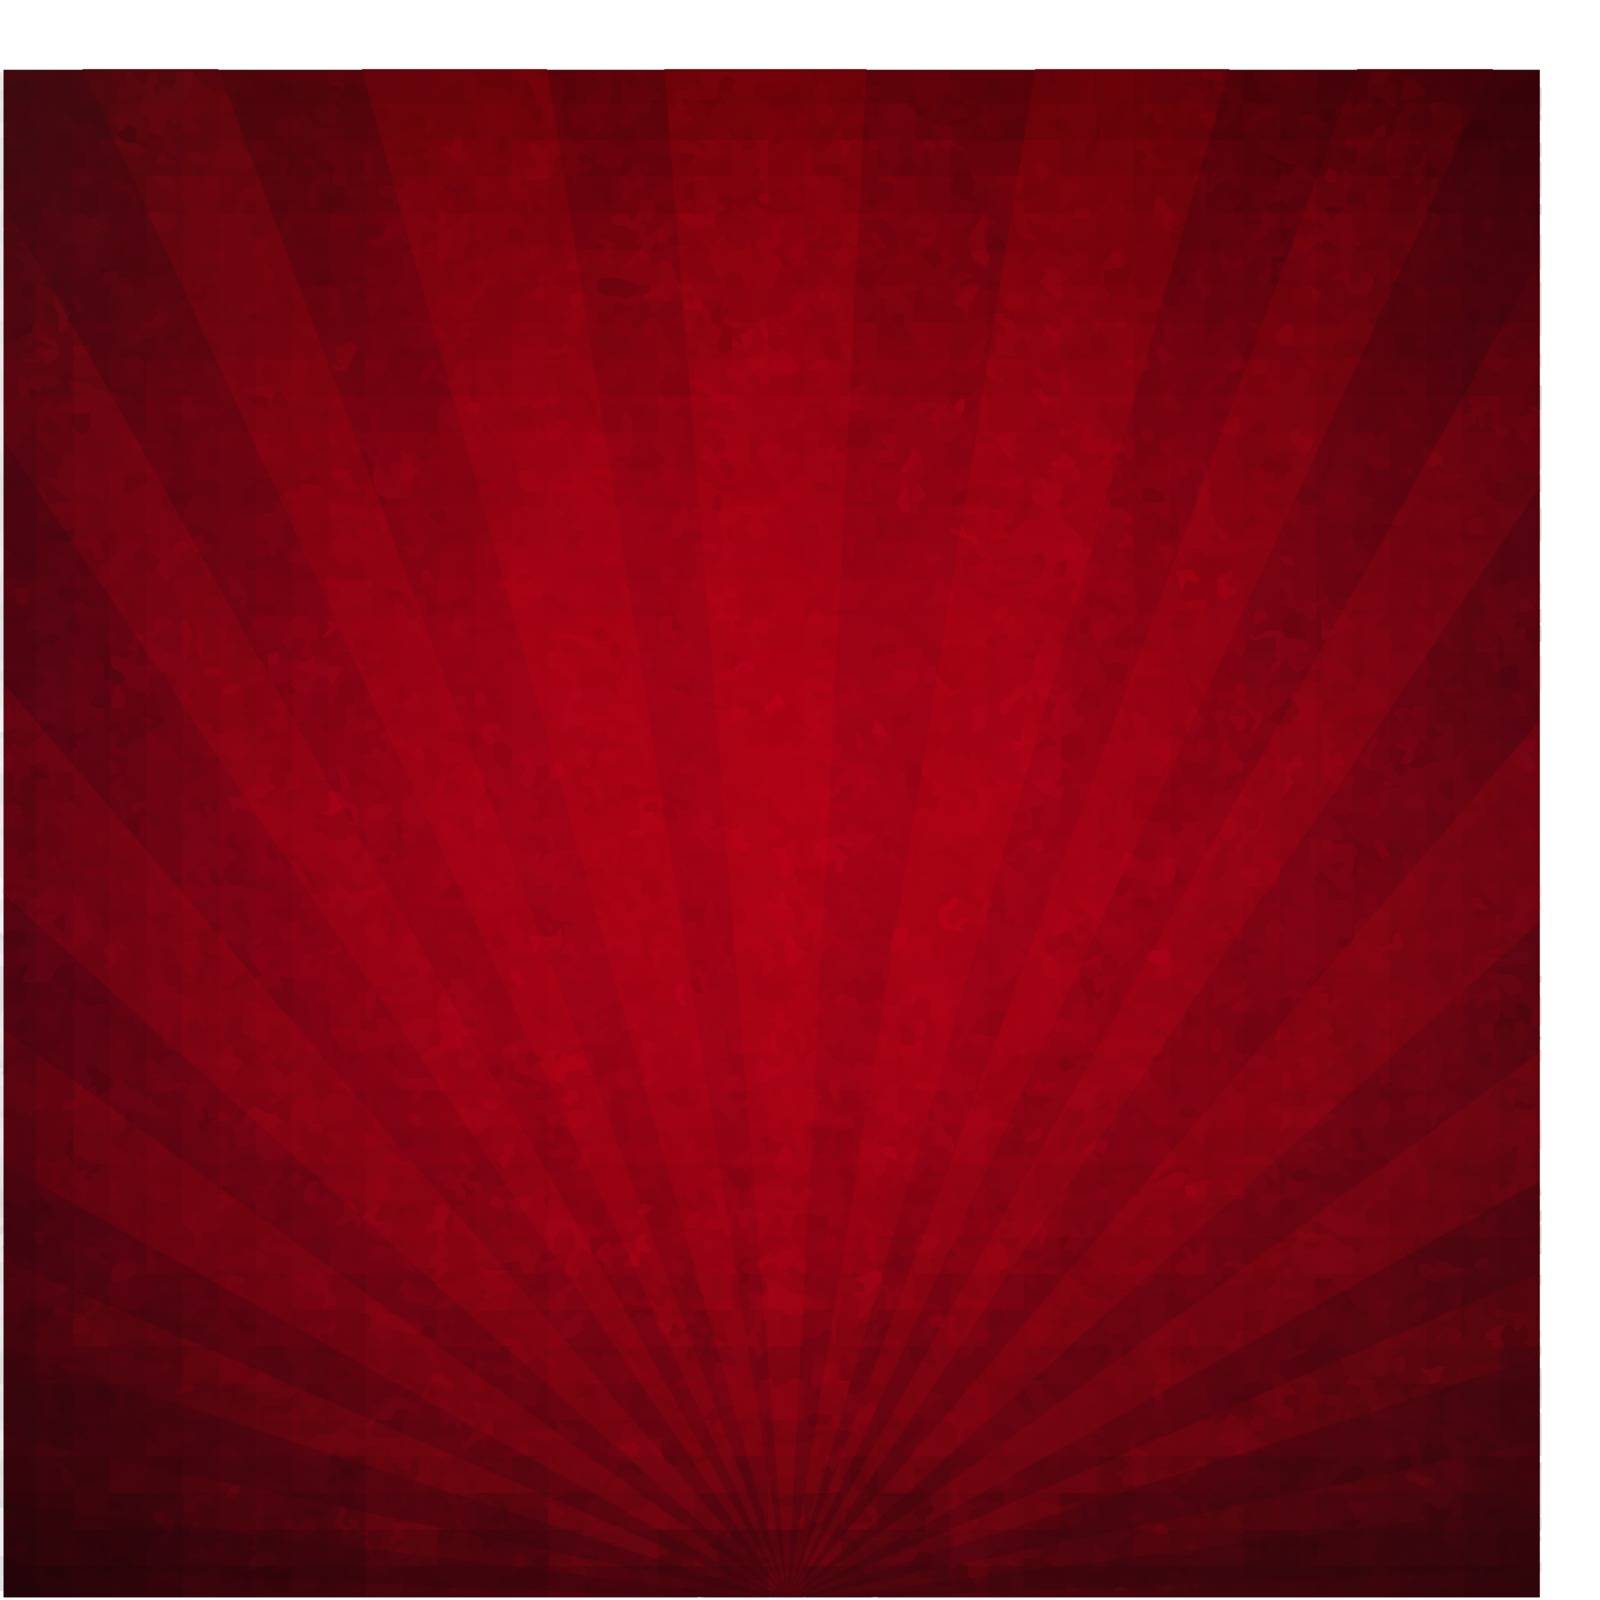 Red Luxury Sunburst Background With Gradient Mesh, Vector Illustration